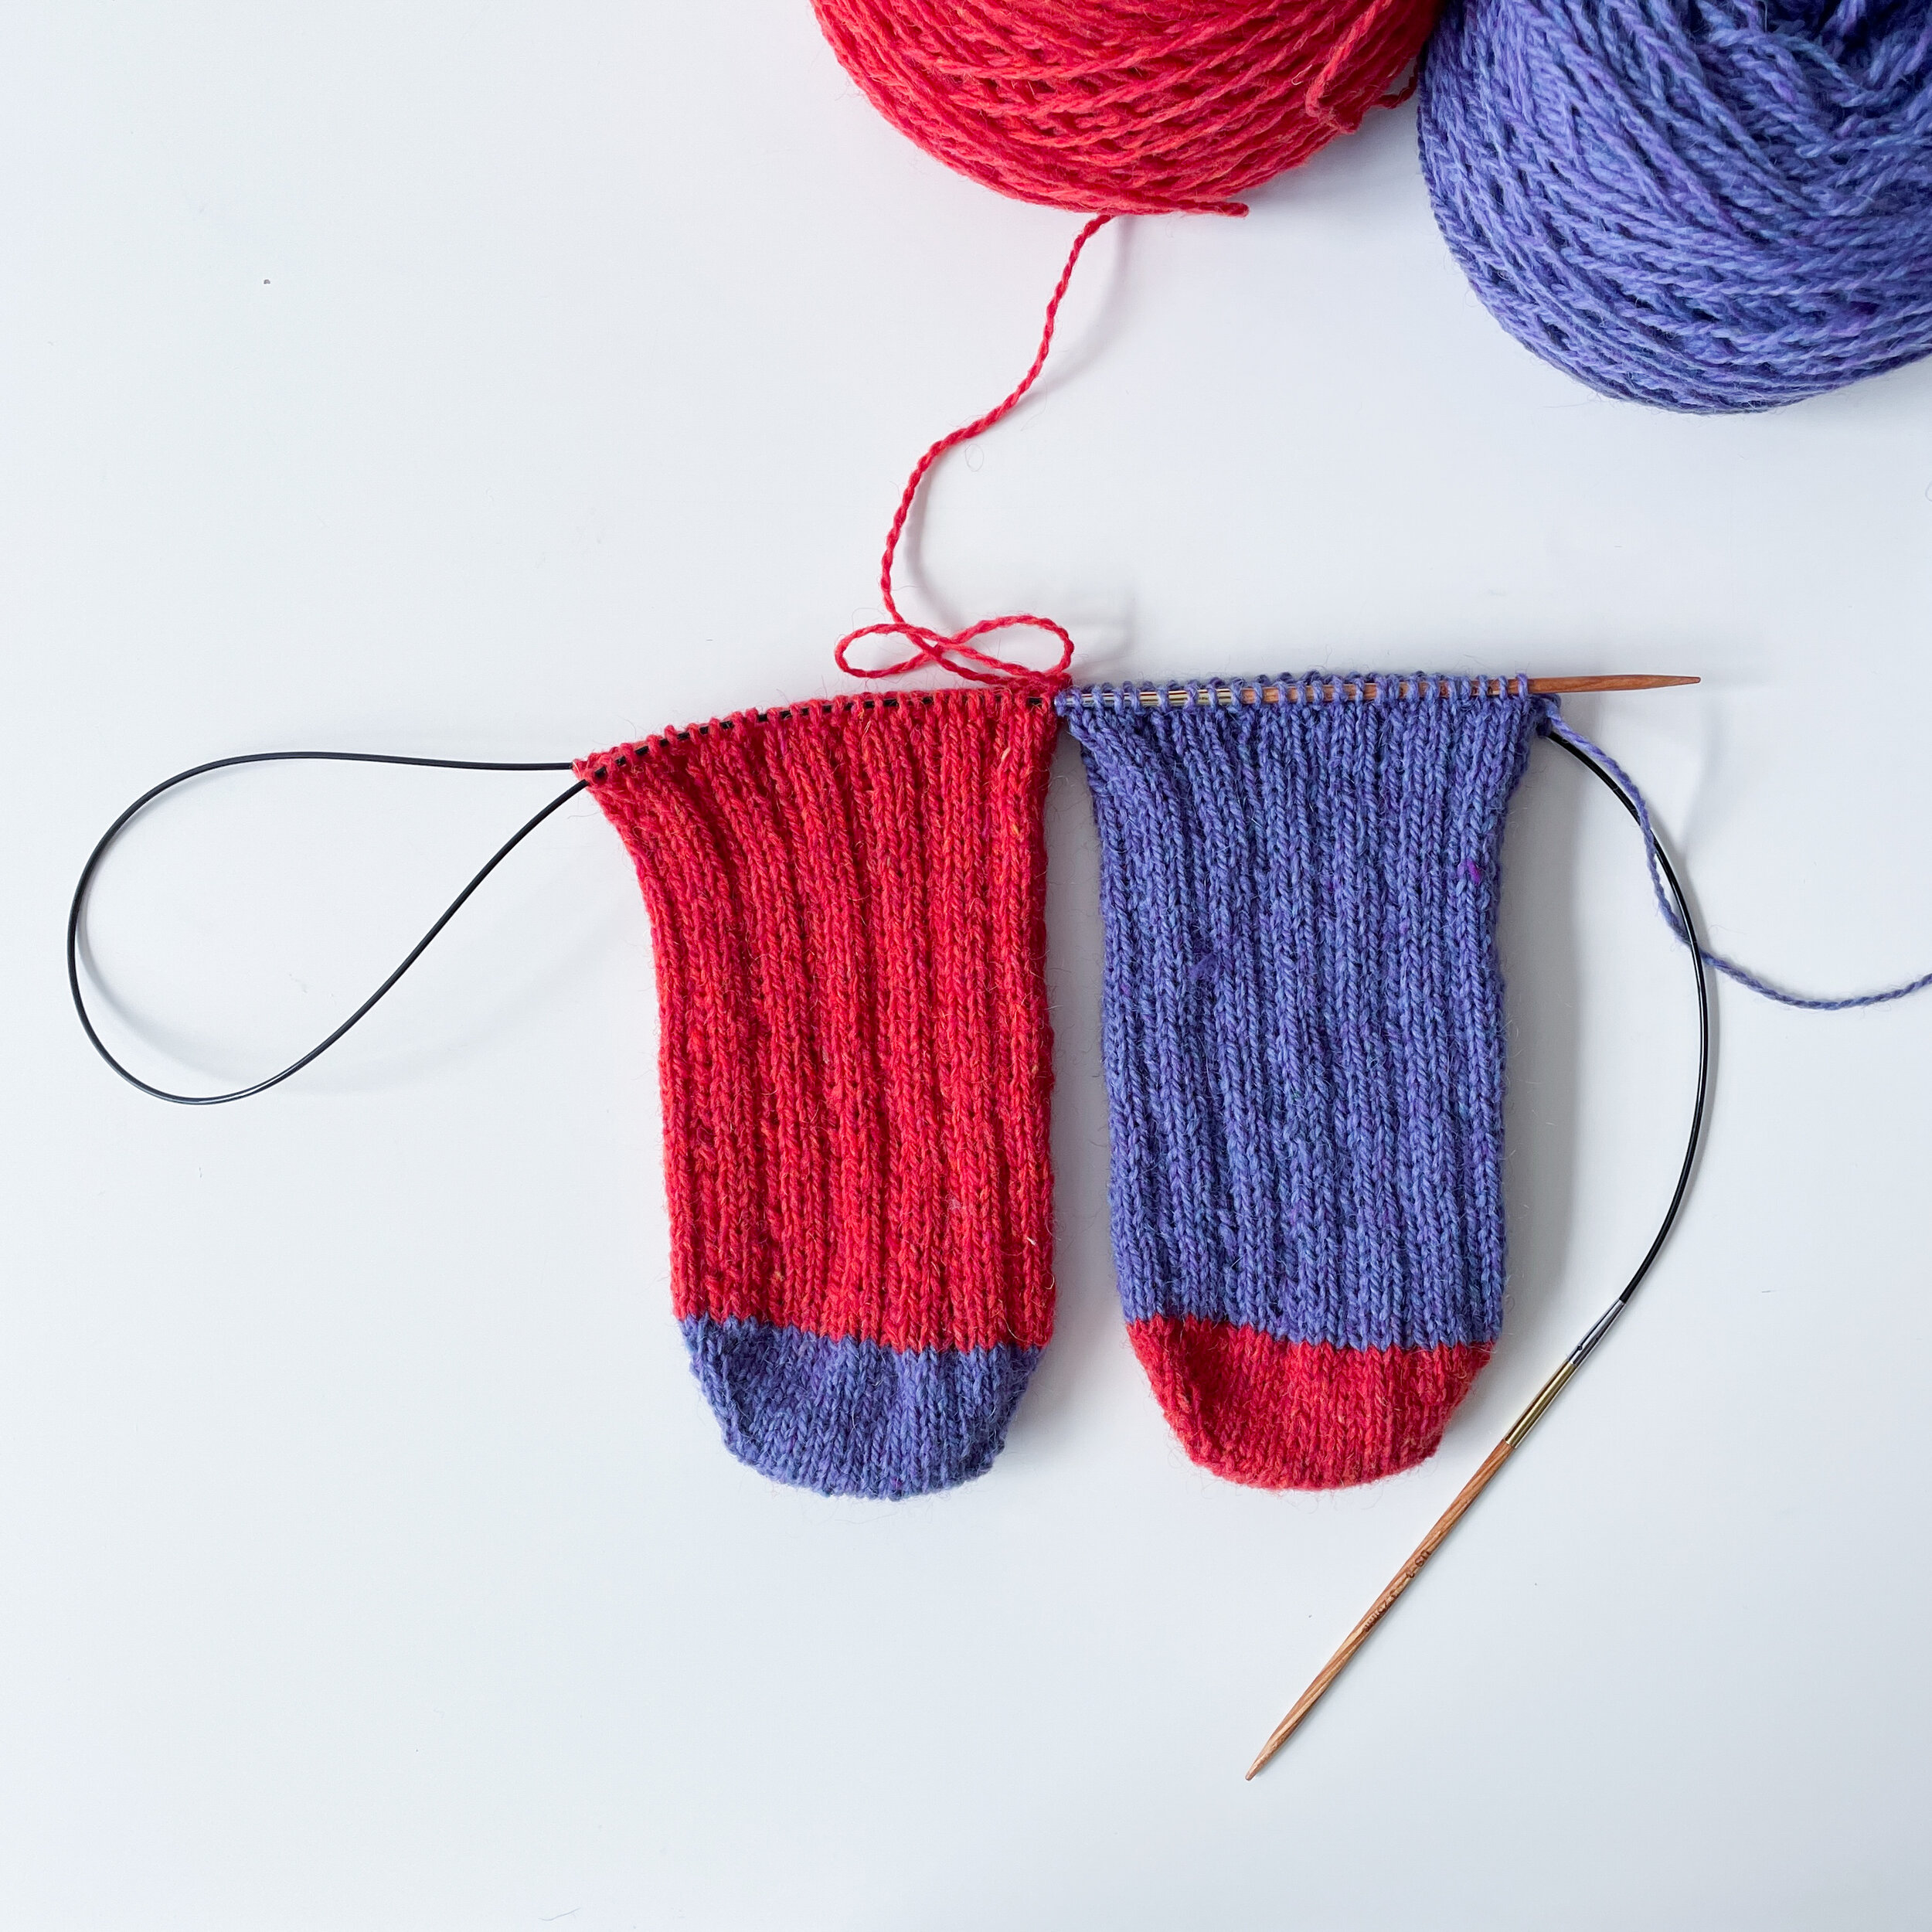 Red Knit Socks, Yoga Socks, Toe Socks, Mismatched Socks, Knitted